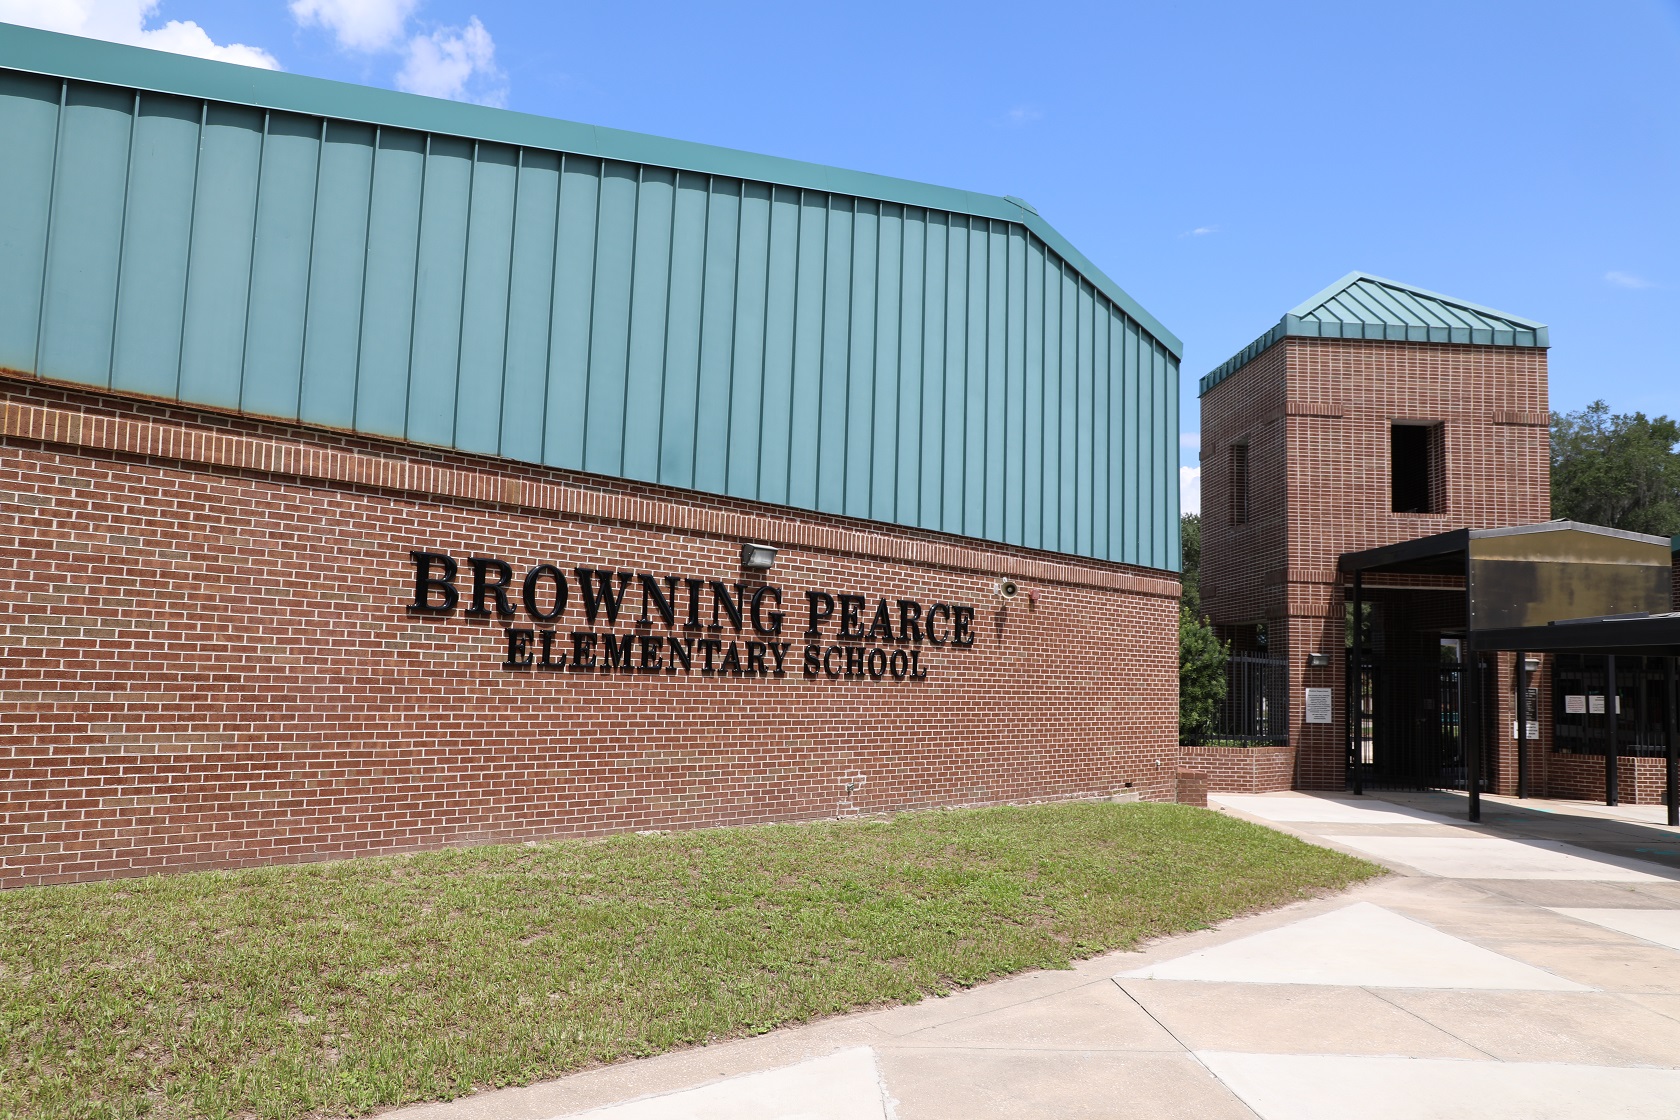 Browning Pearce Elementary School